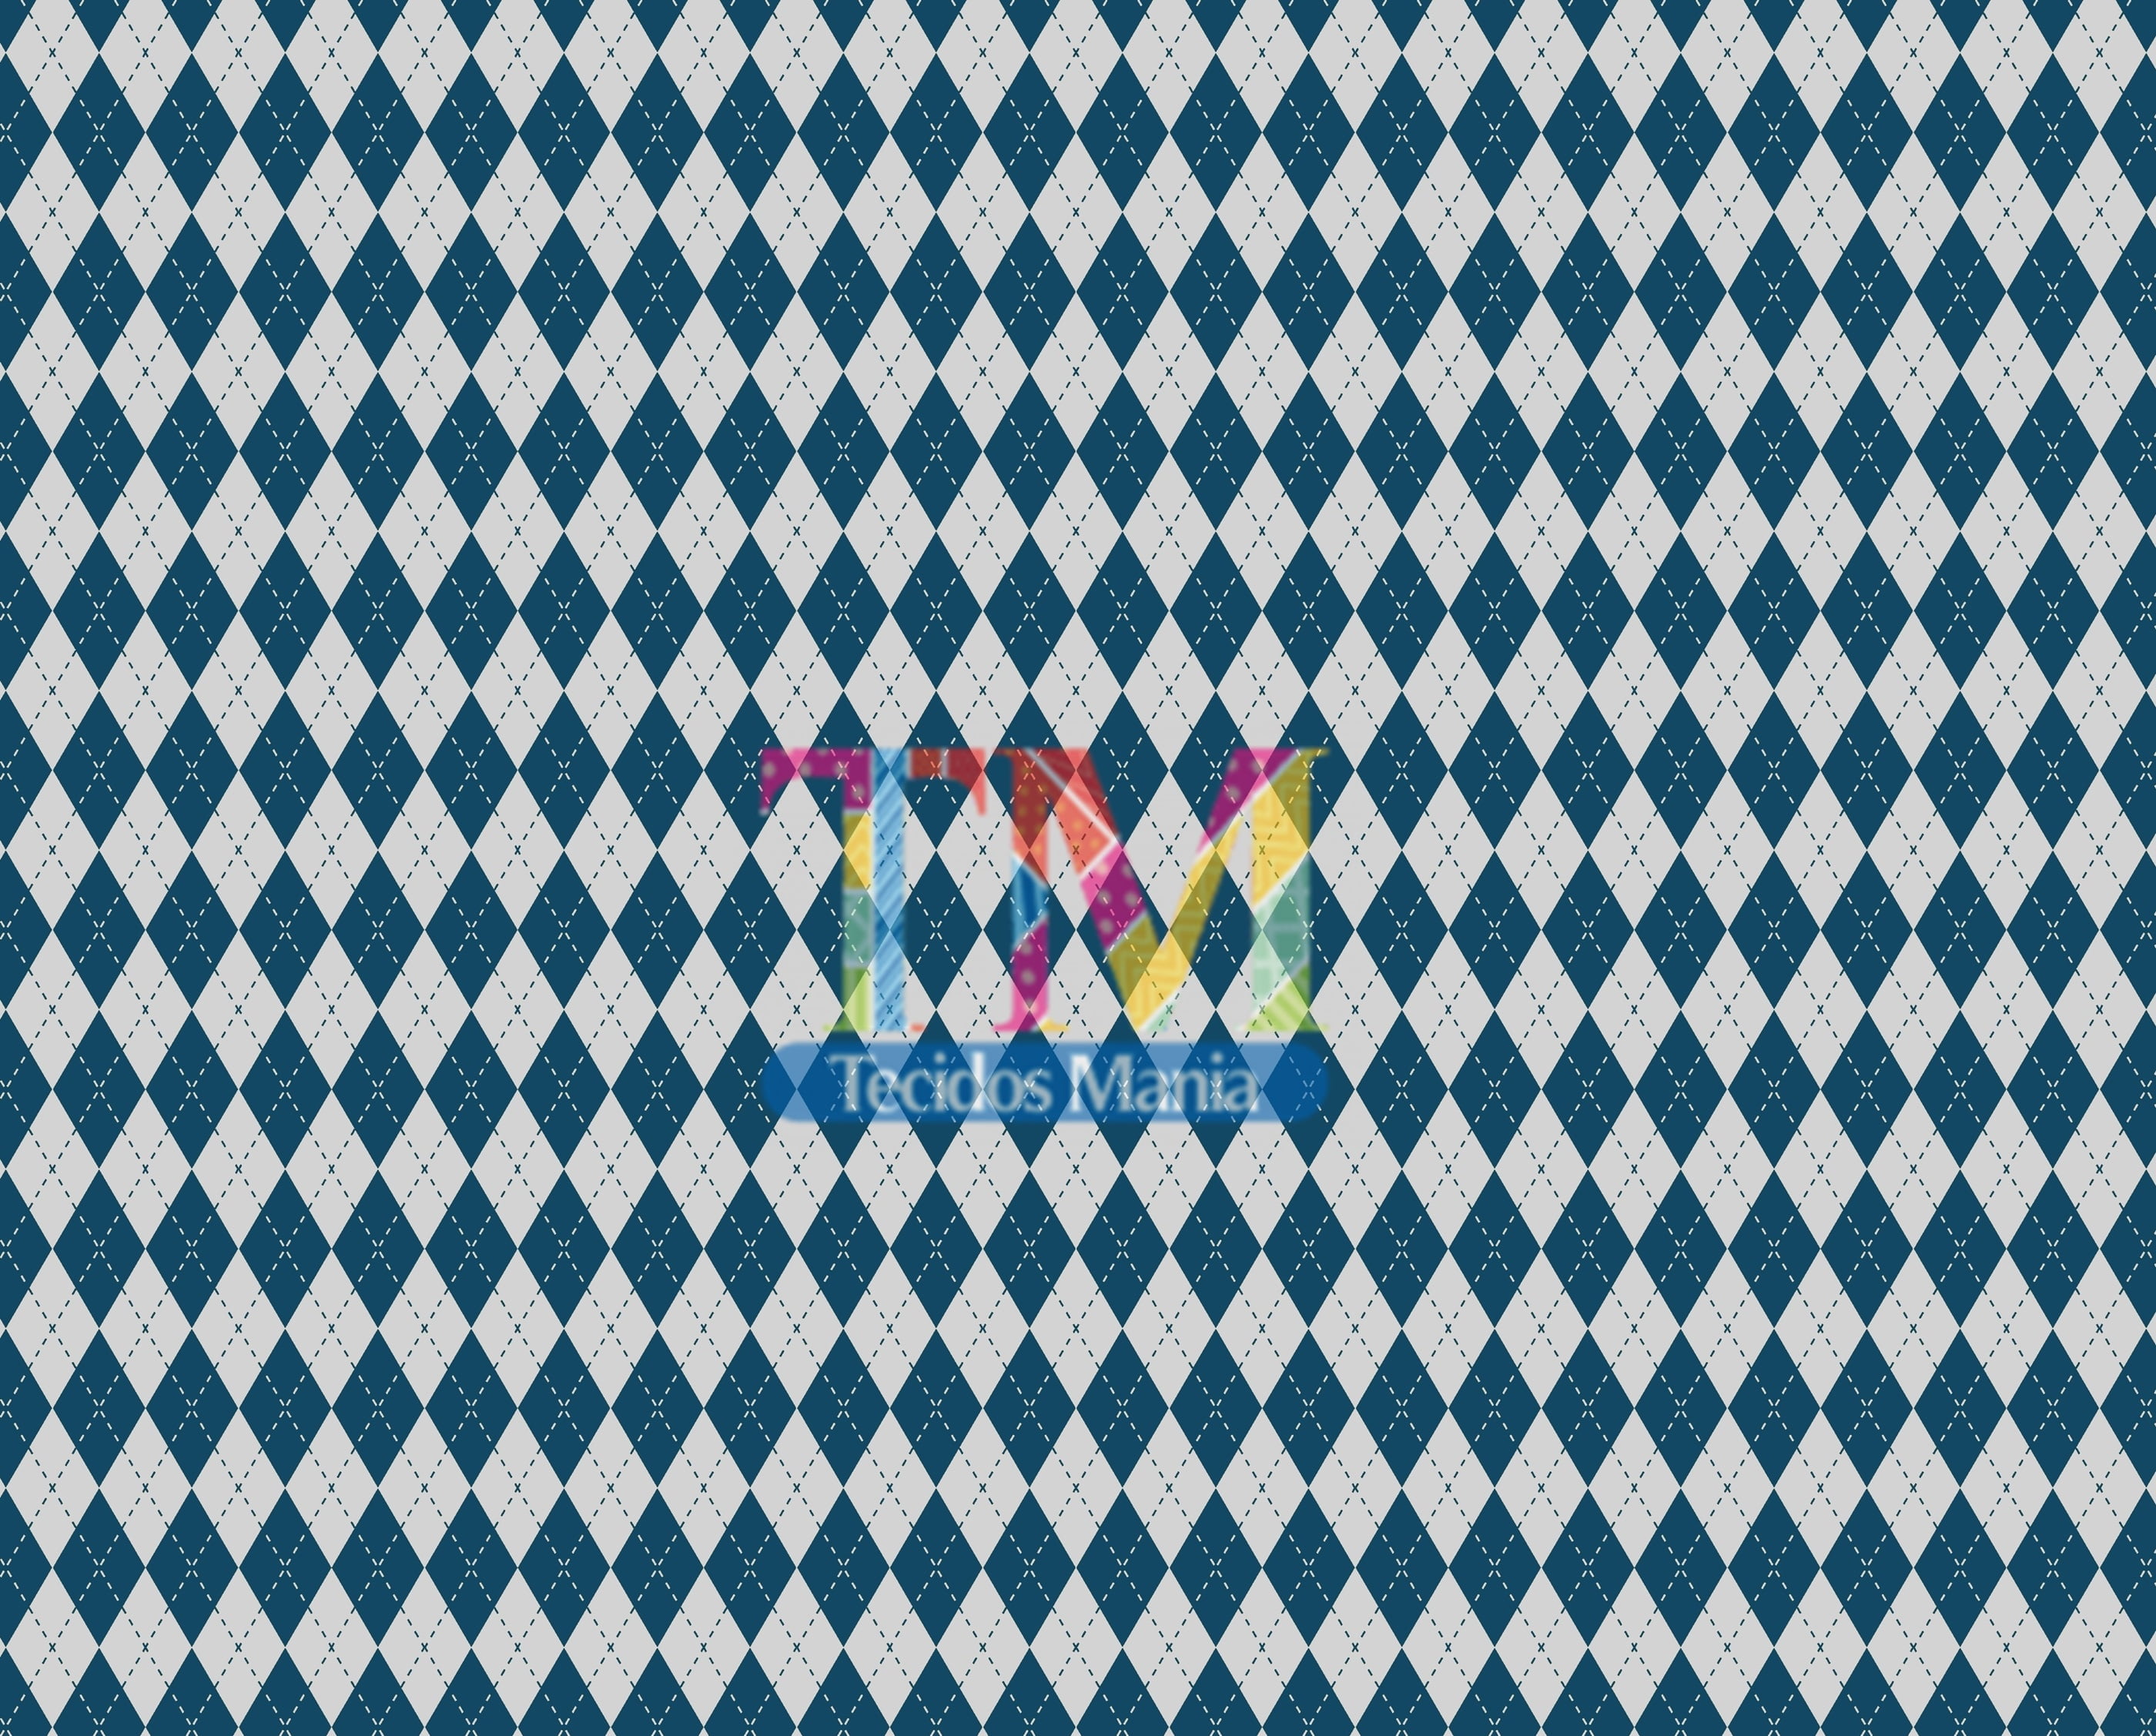 Tecido tricoline, microfibra ou gabardine estampado - Harry Potter - xadrez - Cinza com azul